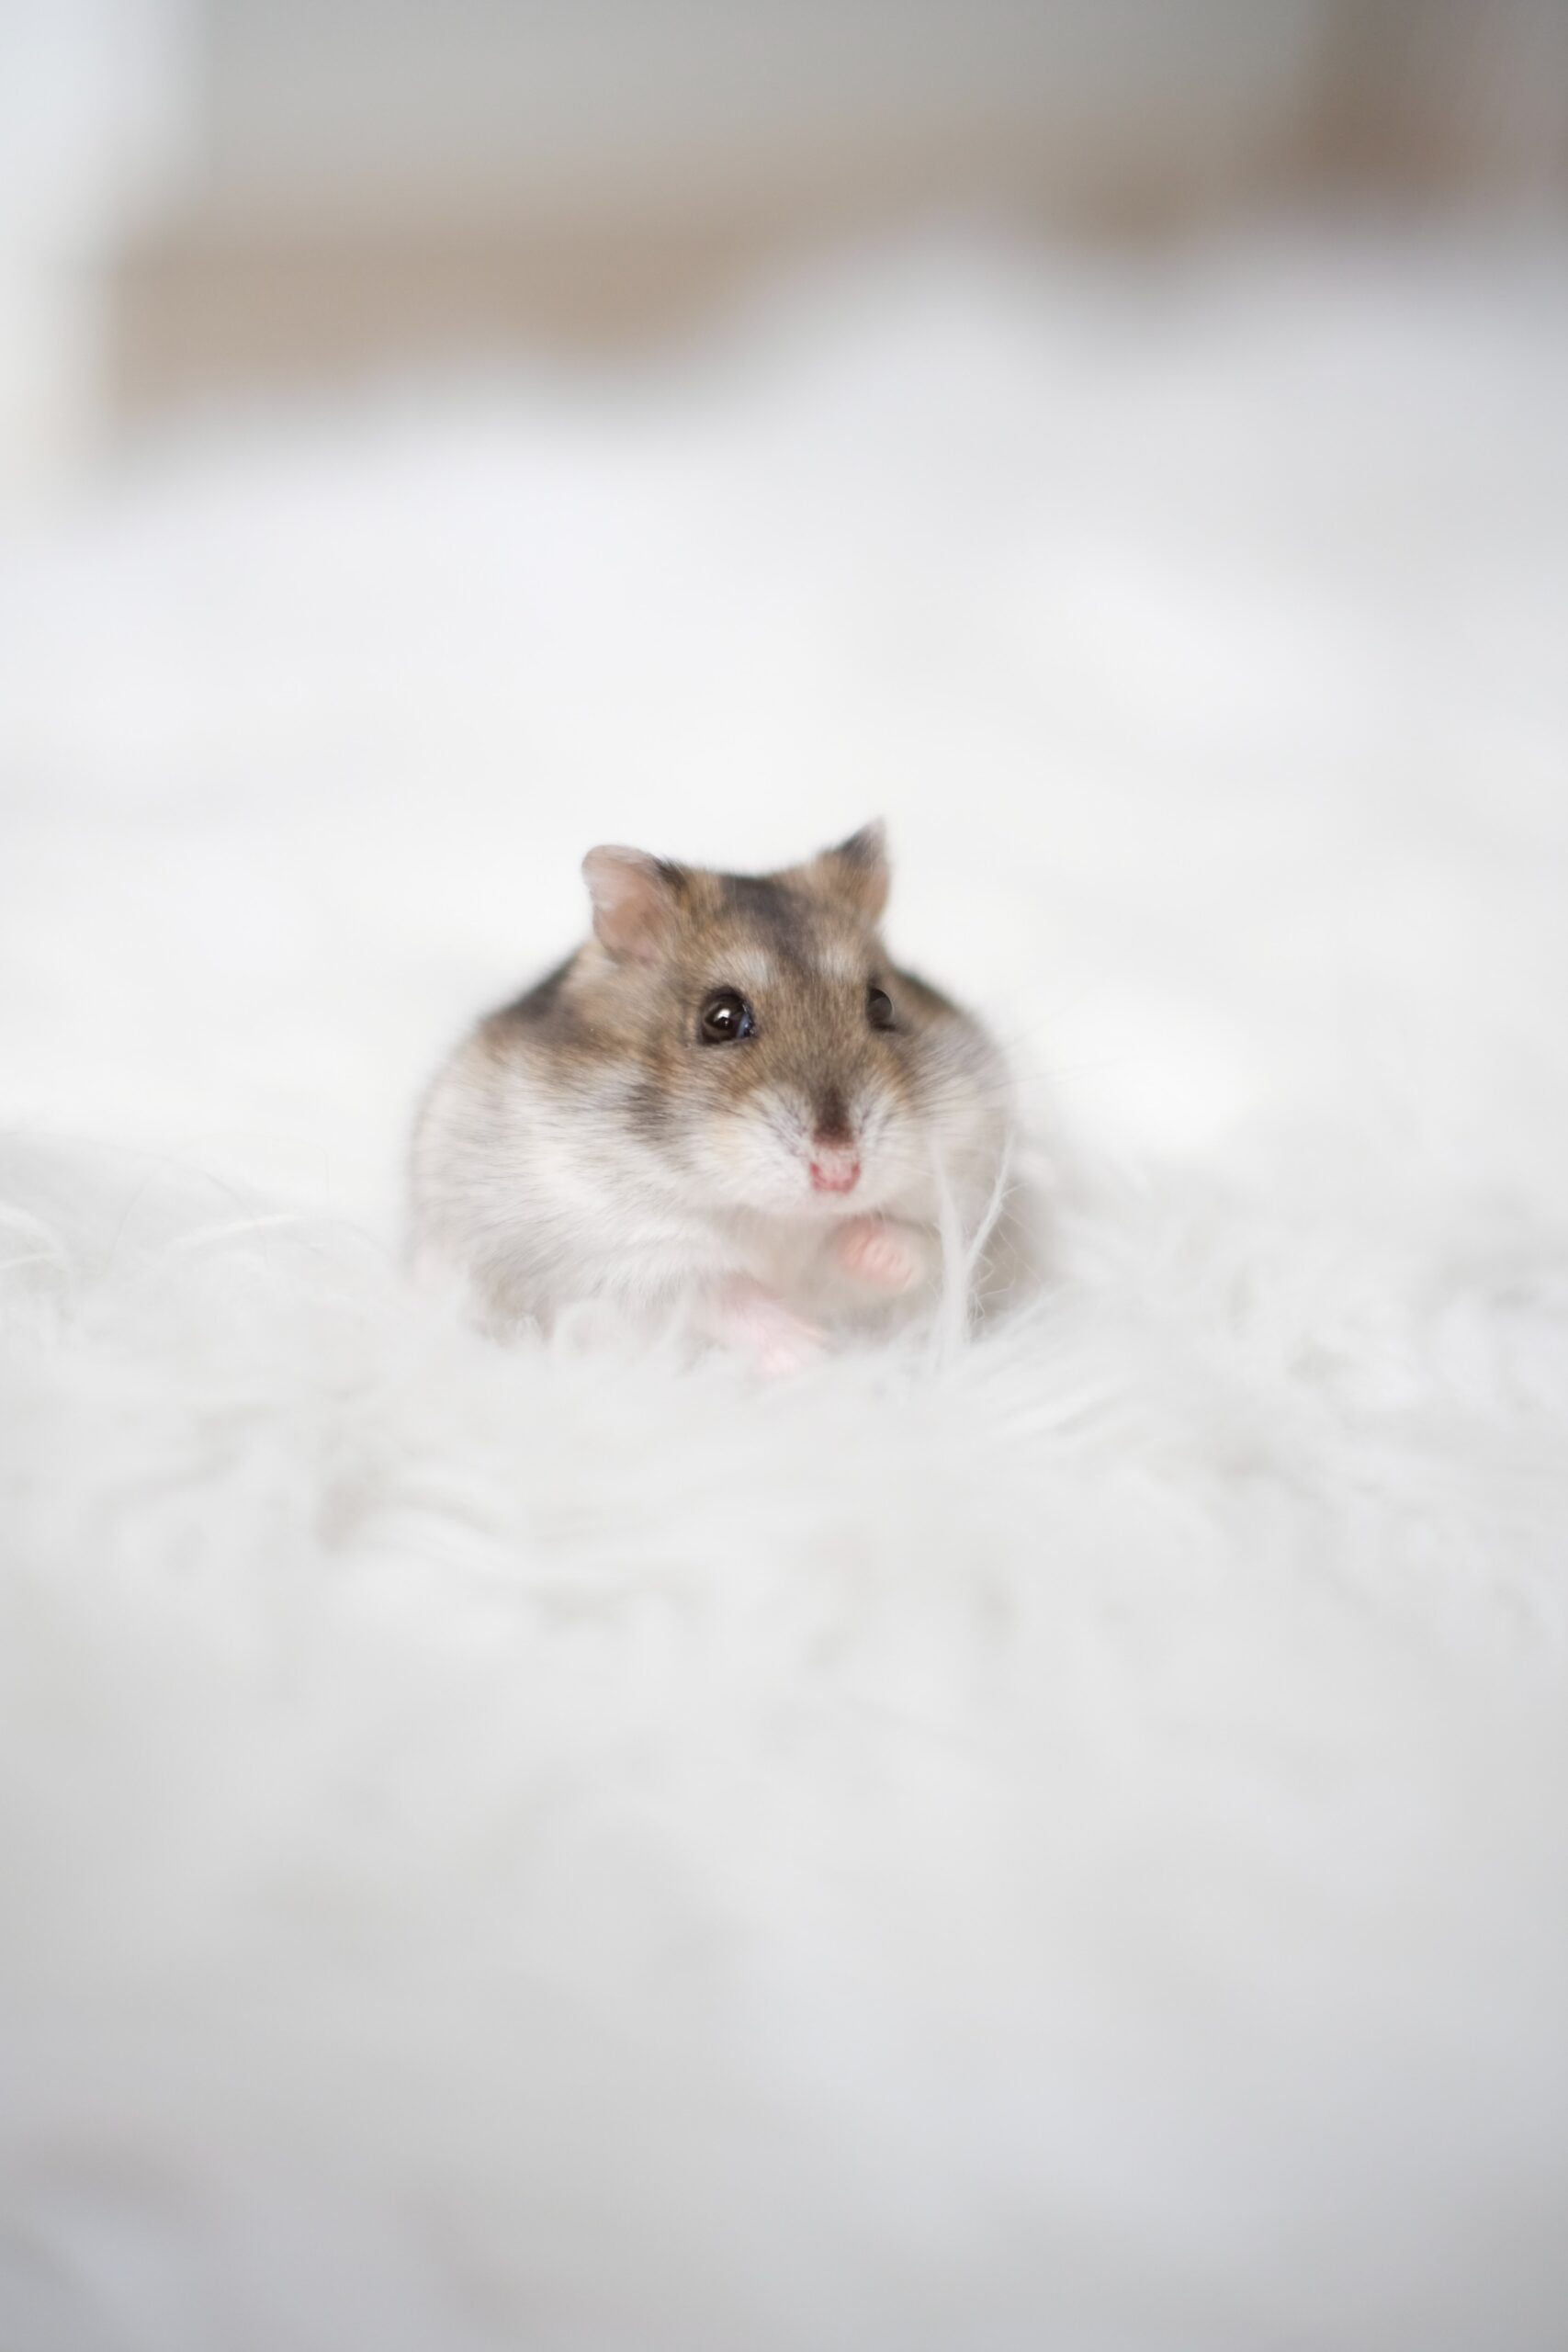 How long do Petsmart hamsters live?